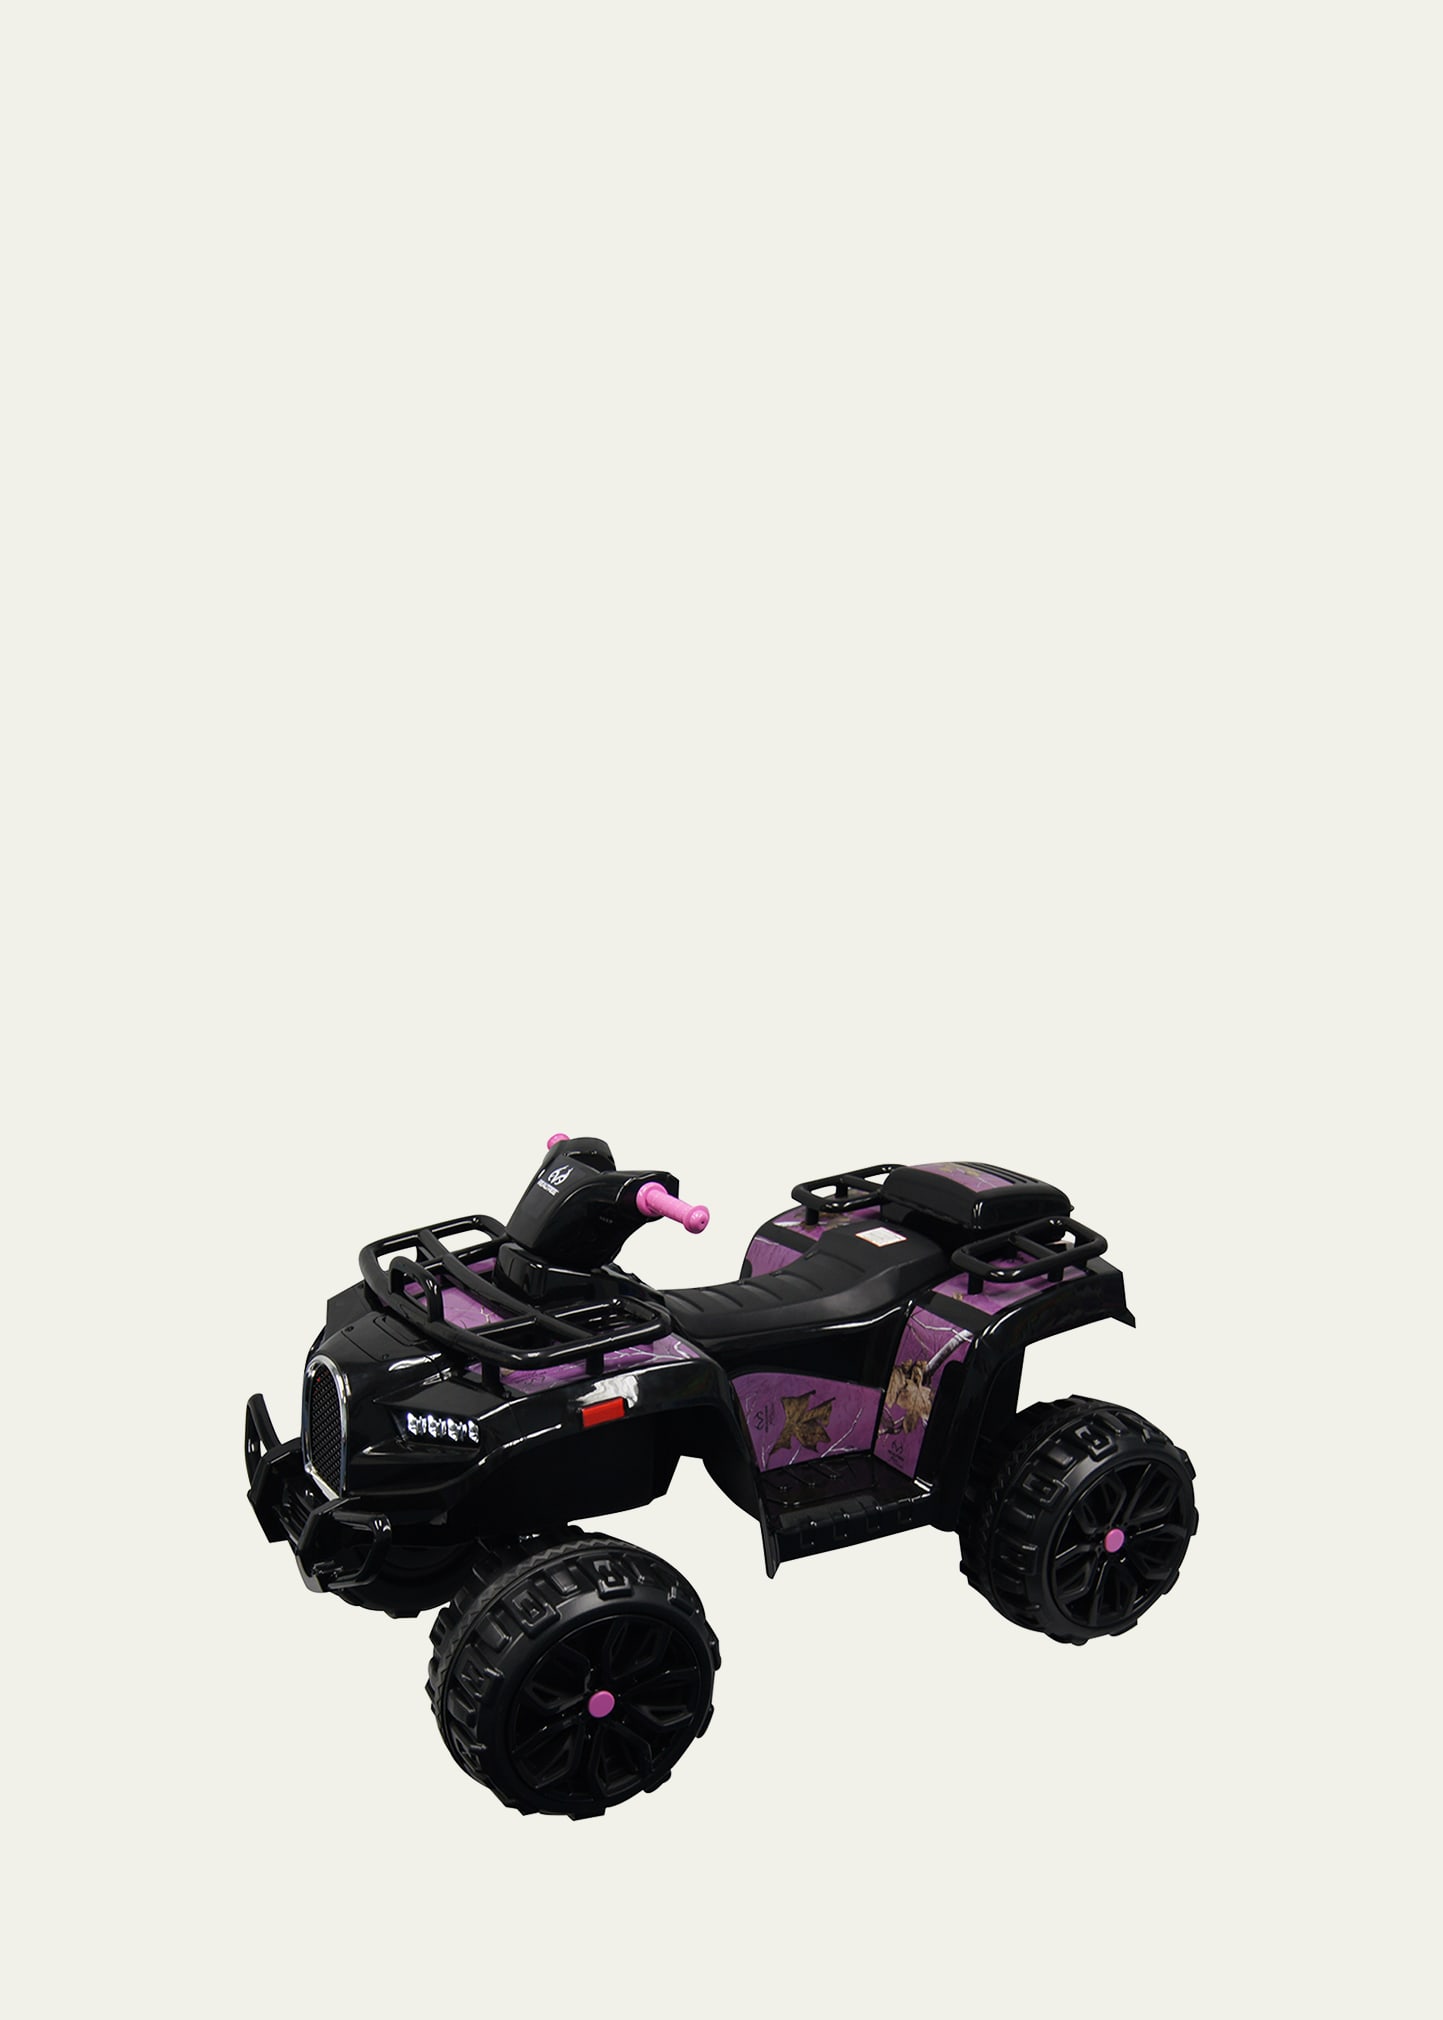 Kid's Realtree ATV Ride On Toy